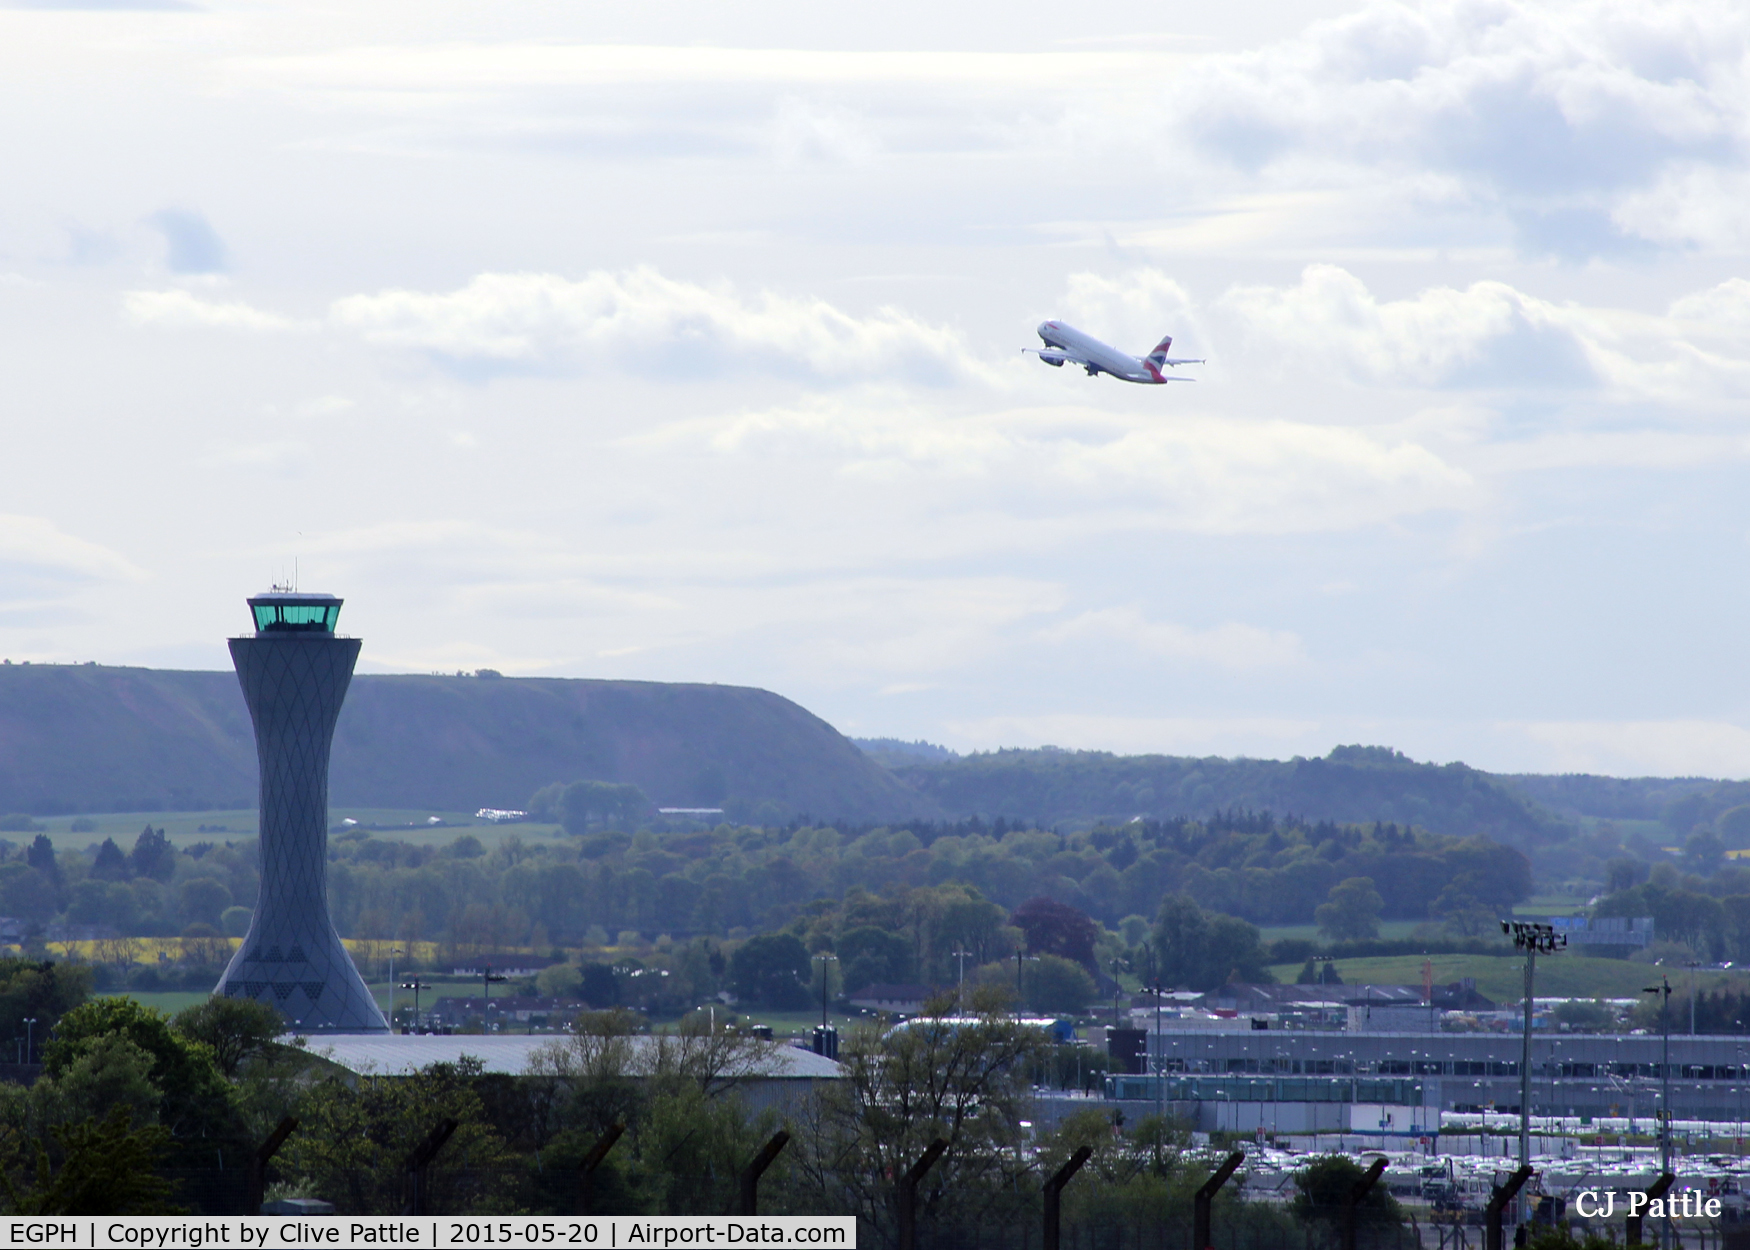 Edinburgh Airport, Edinburgh, Scotland United Kingdom (EGPH) - An atmospheric shot of a departure from Edinburgh EGPH with the prominent Tower on show.